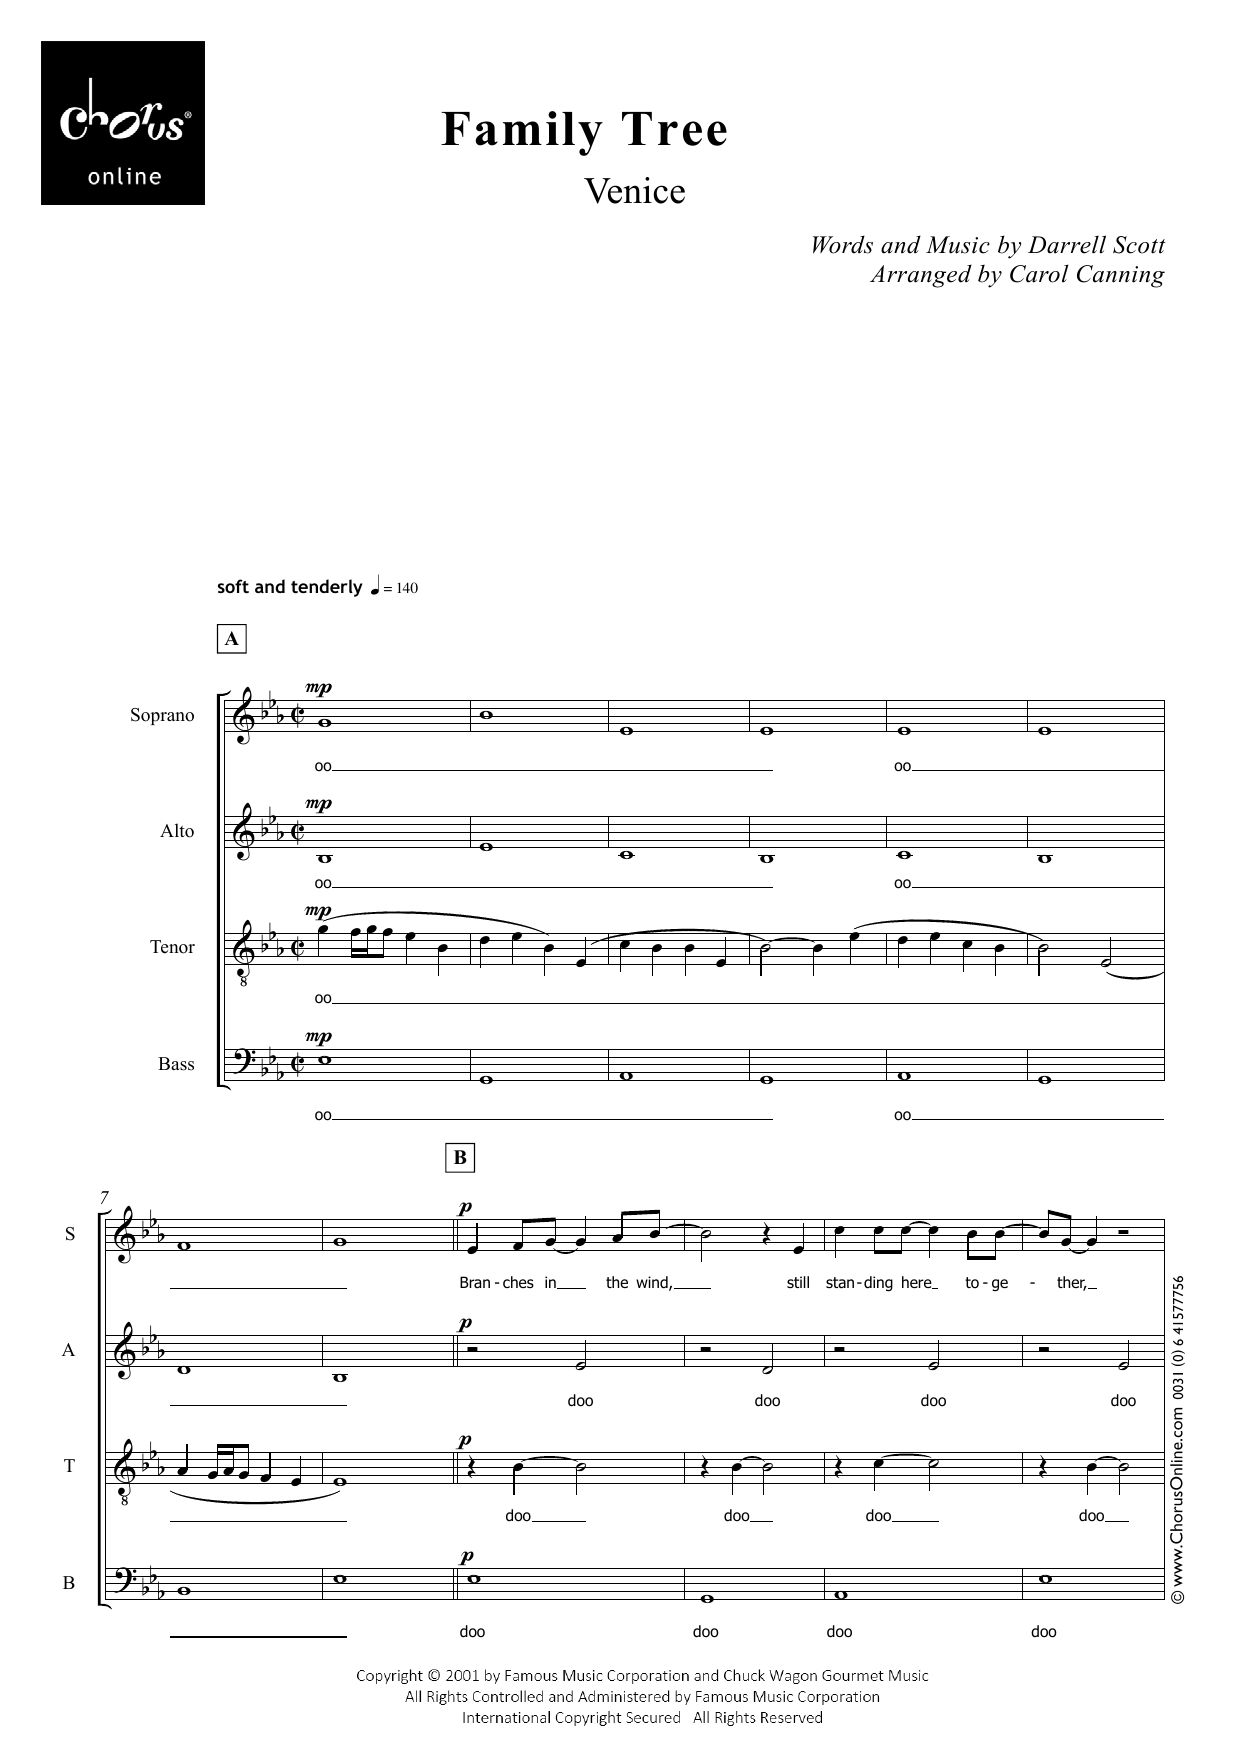 Venice Family Tree (arr. Carol Canning) sheet music notes printable PDF score